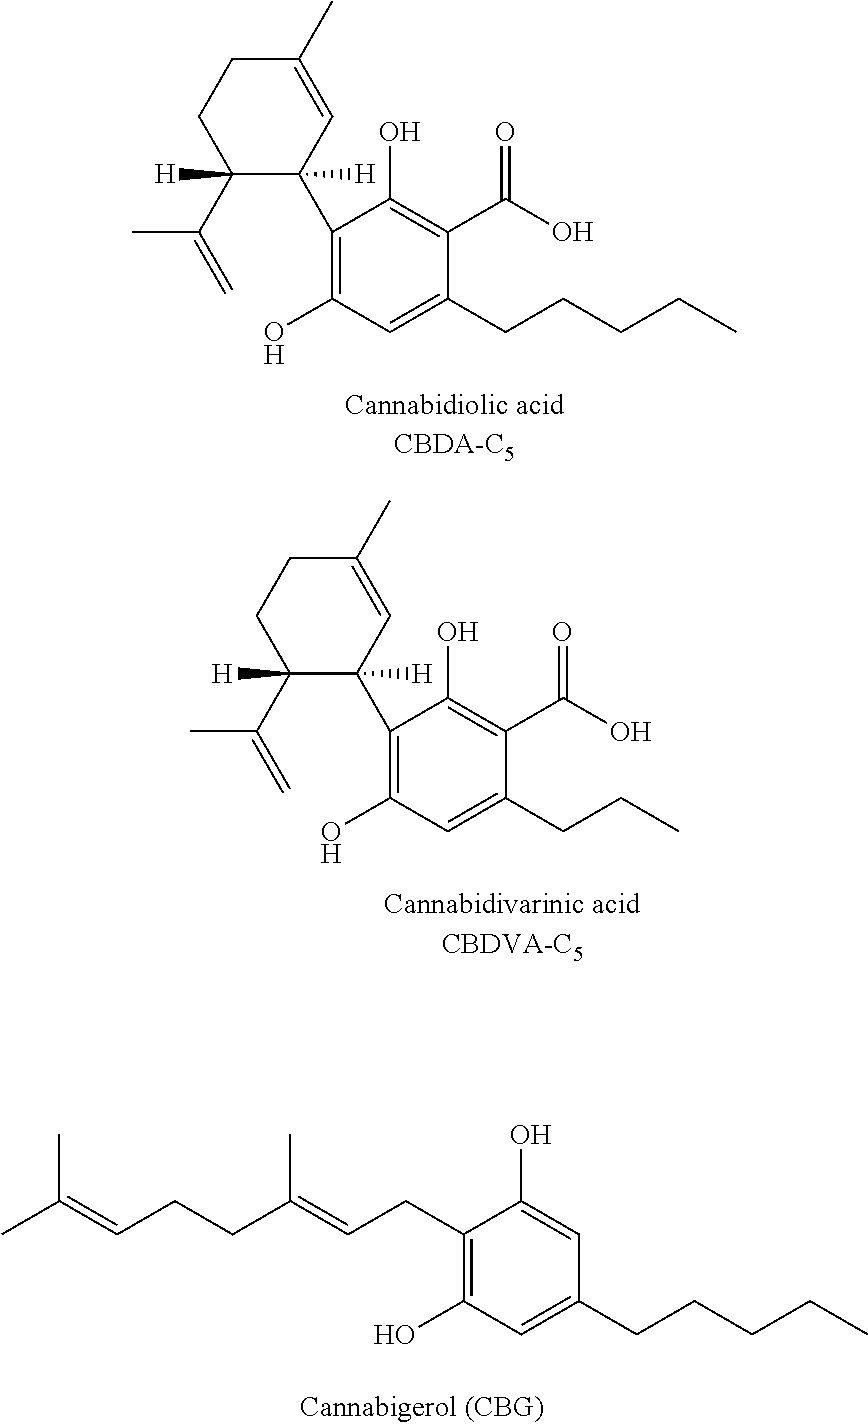 Industrial hemp cannabis cultivars and seeds with stable cannabinoid profiles